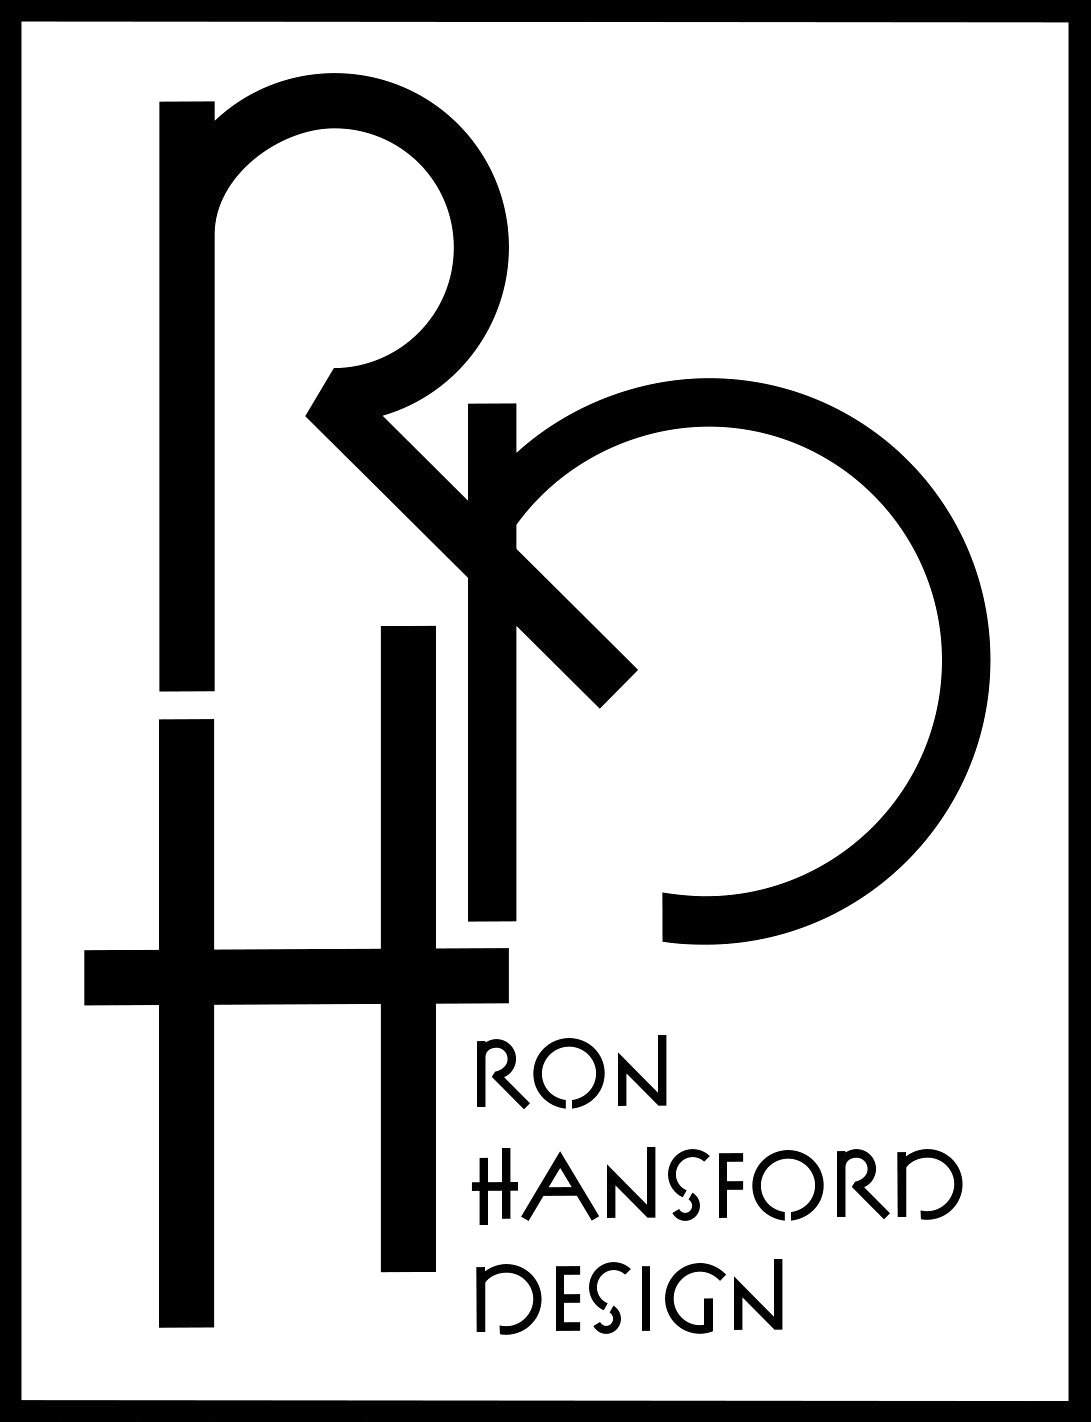 Ron Hansford Design